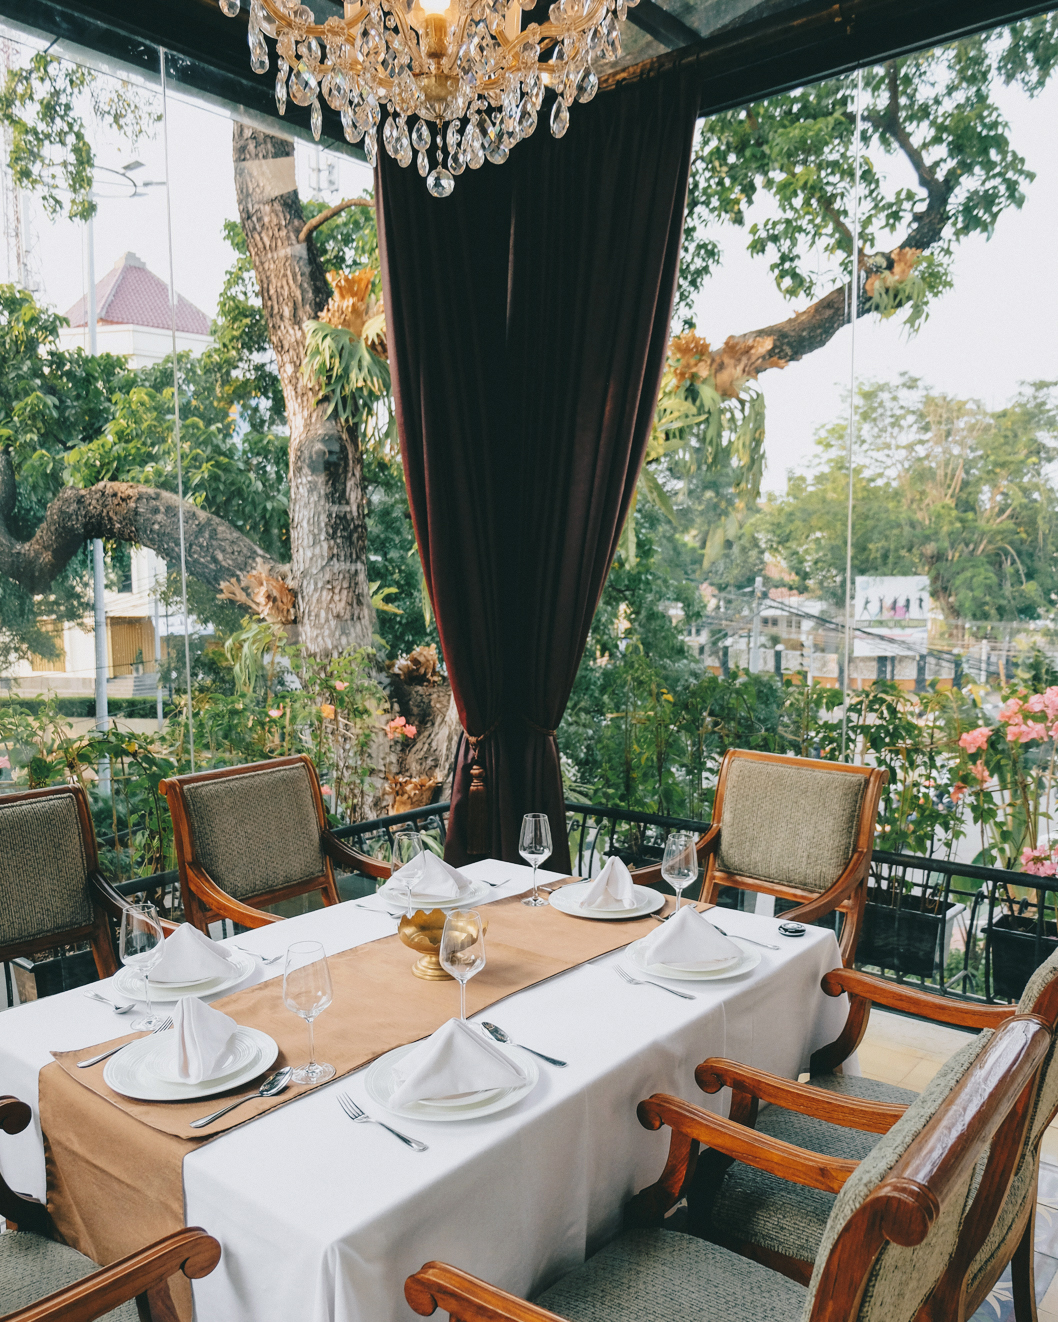 VALENTINE'S DAY DINNER JAKARTA 2018 - ROMANTIC RESTAURANTS IN JAKARTA